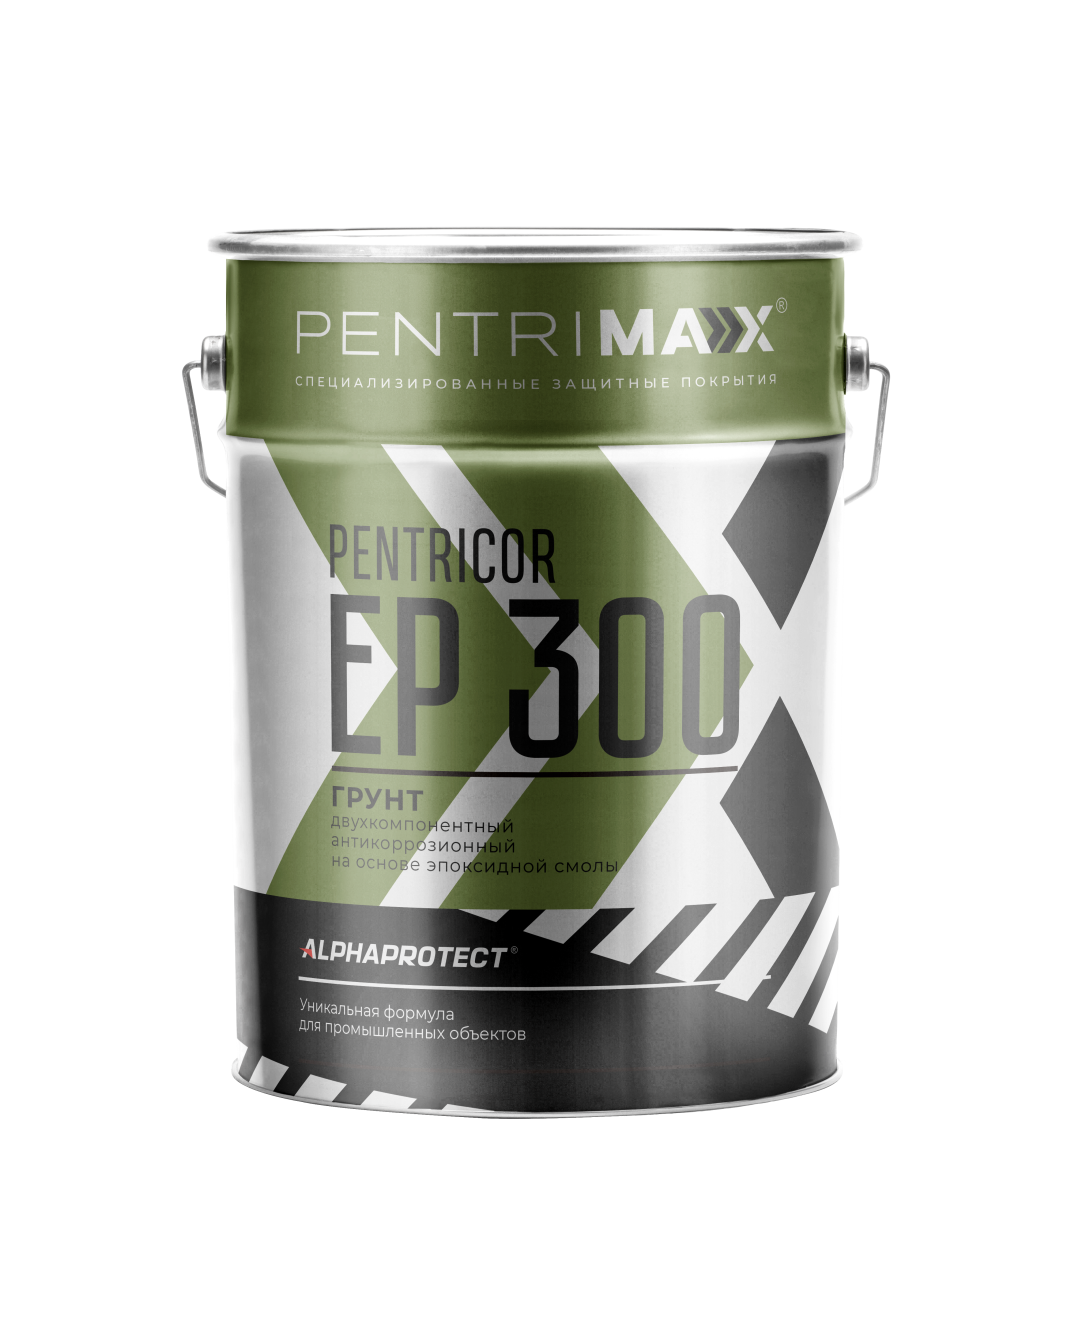 Эпоксидный грунт для металла PENTRICOR EP 300